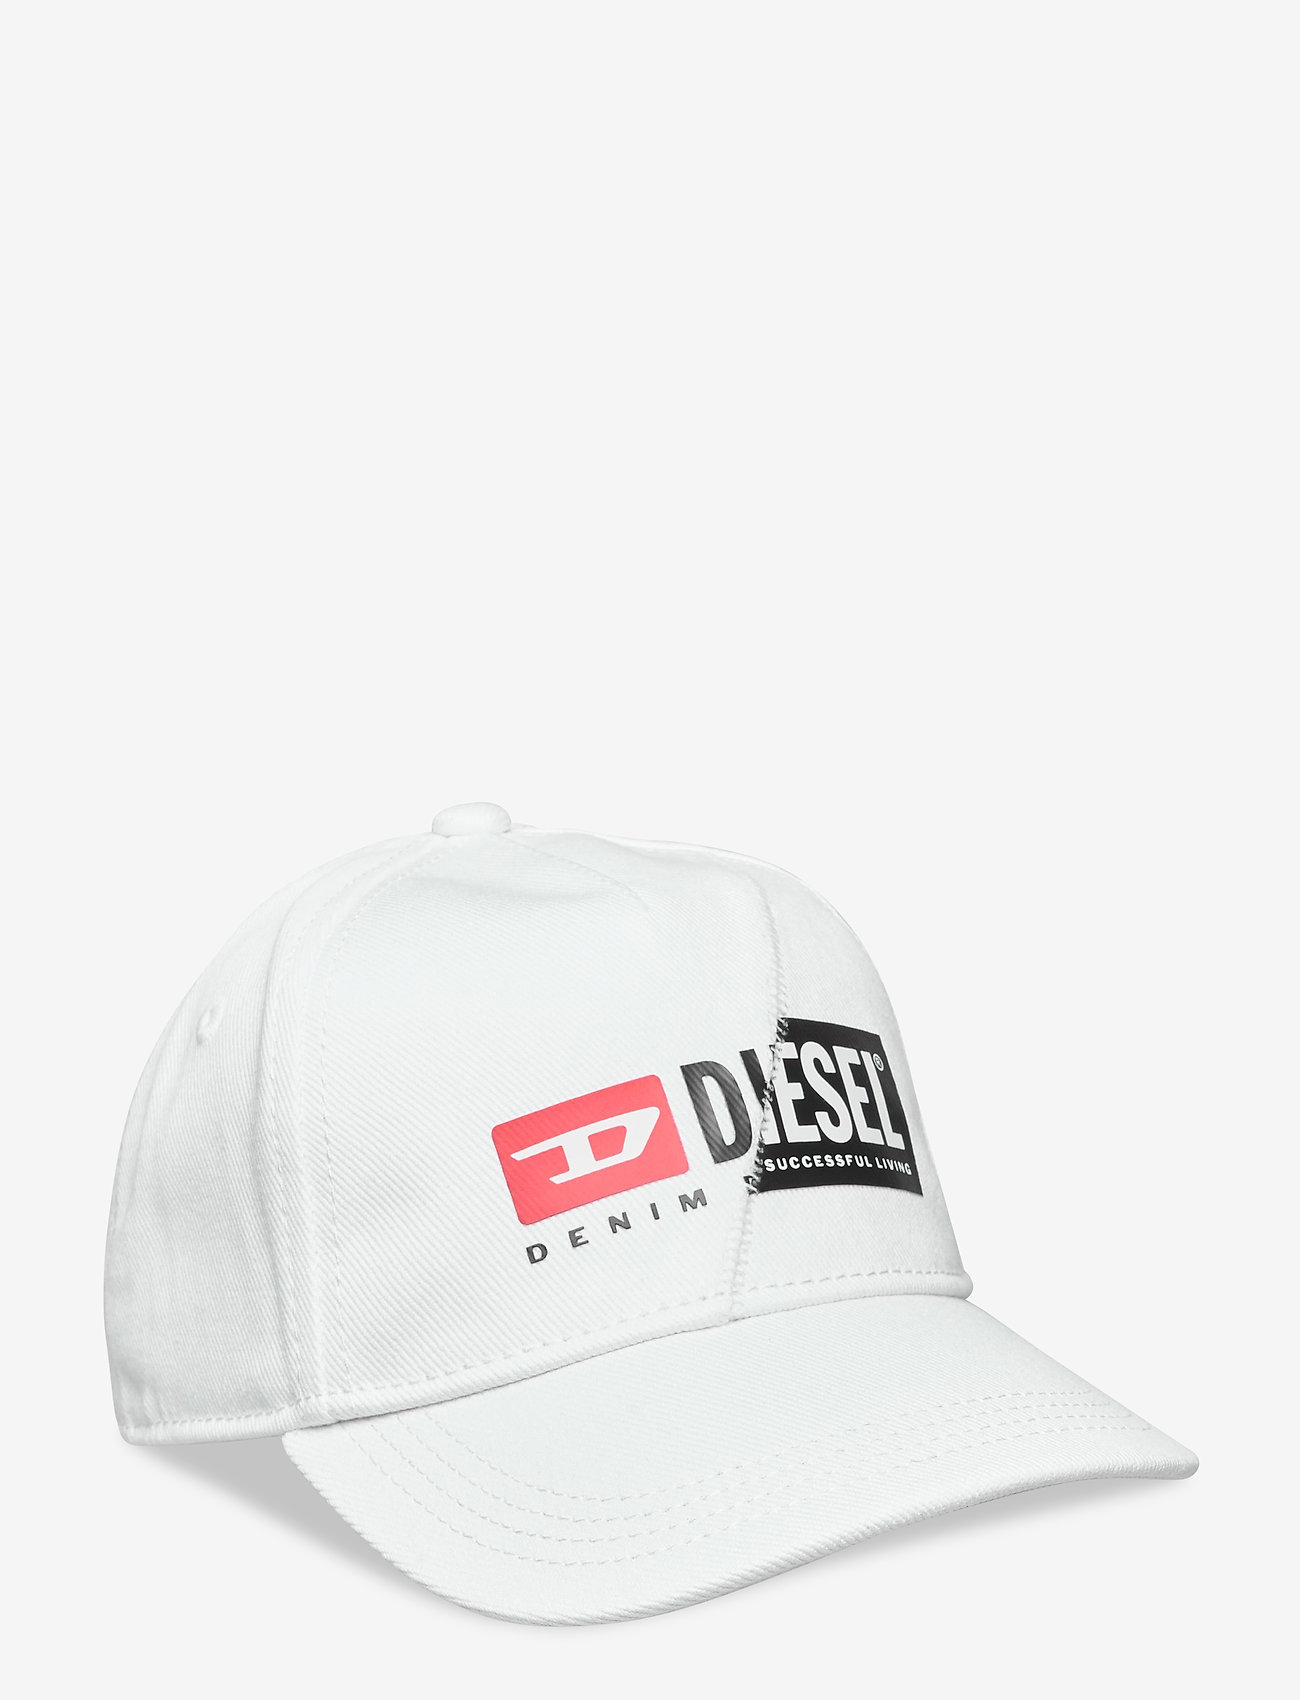 Diesel Fcuty Hat - Caps | Boozt.com